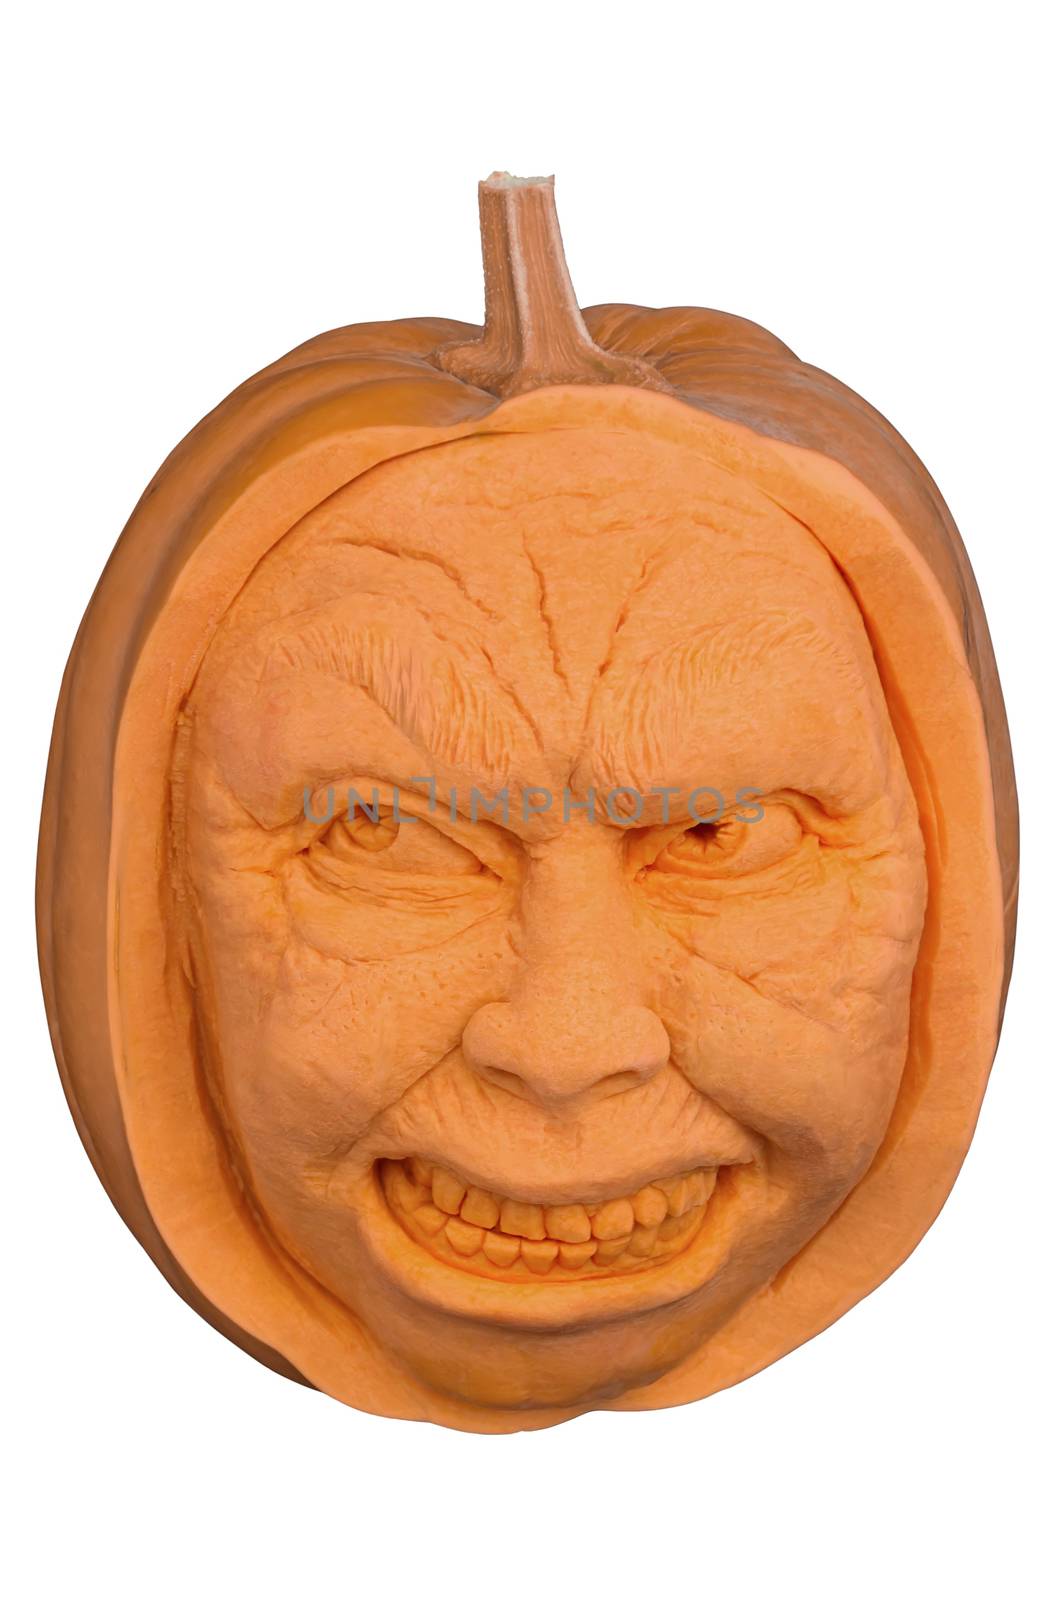 Pumpkin carving by myyayko